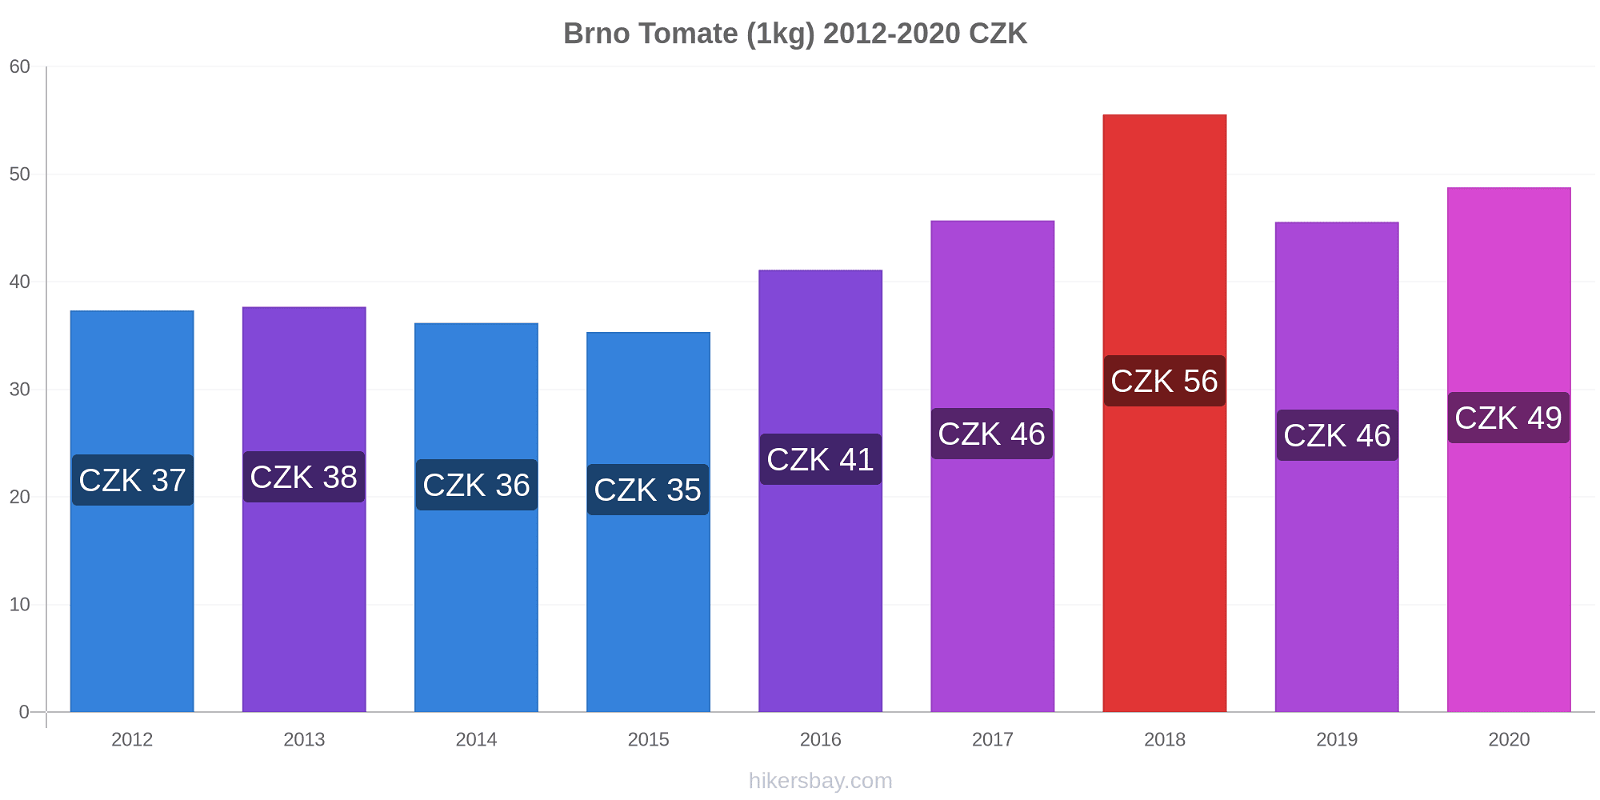 Brno changements de prix Tomate (1kg) hikersbay.com